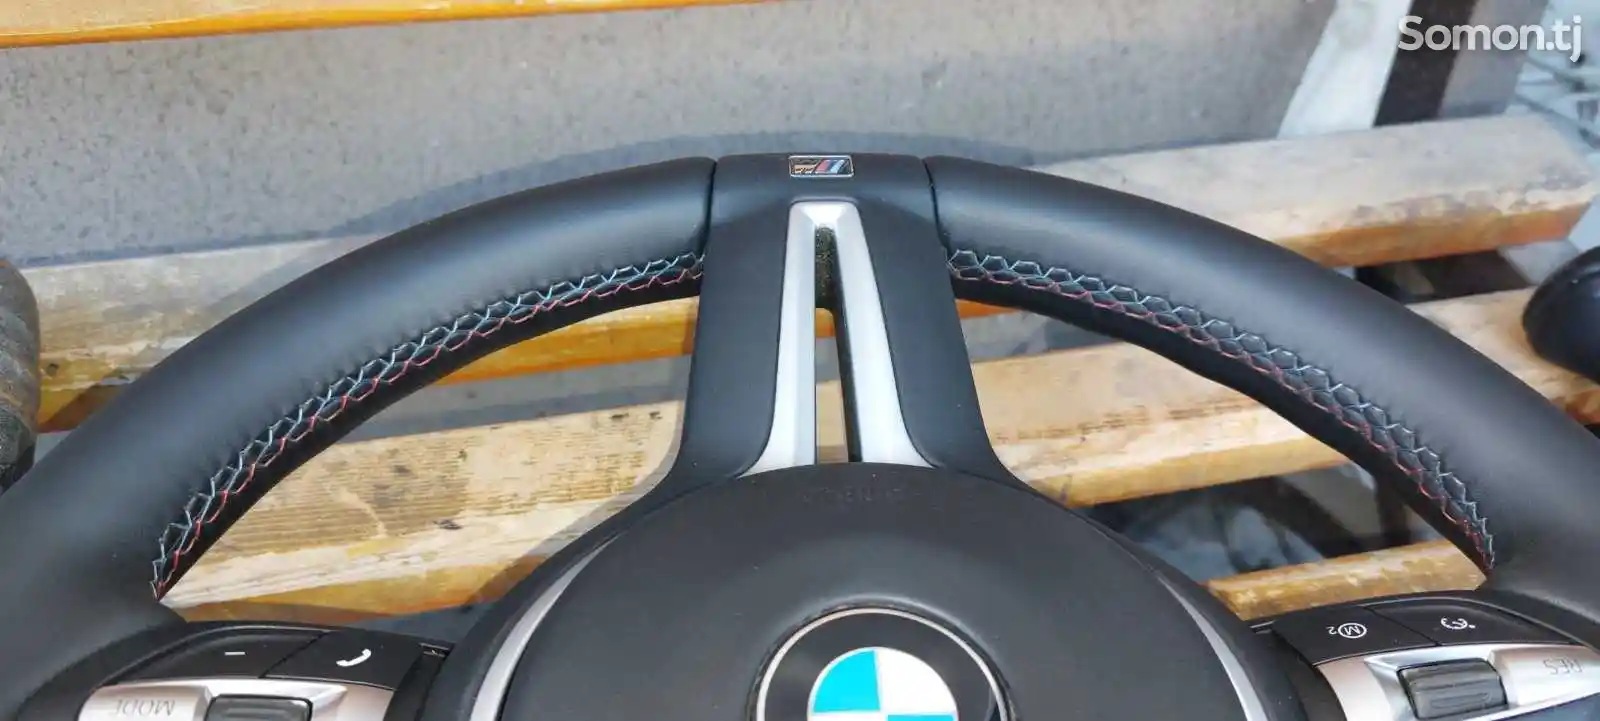 Руль от BMW f85-5